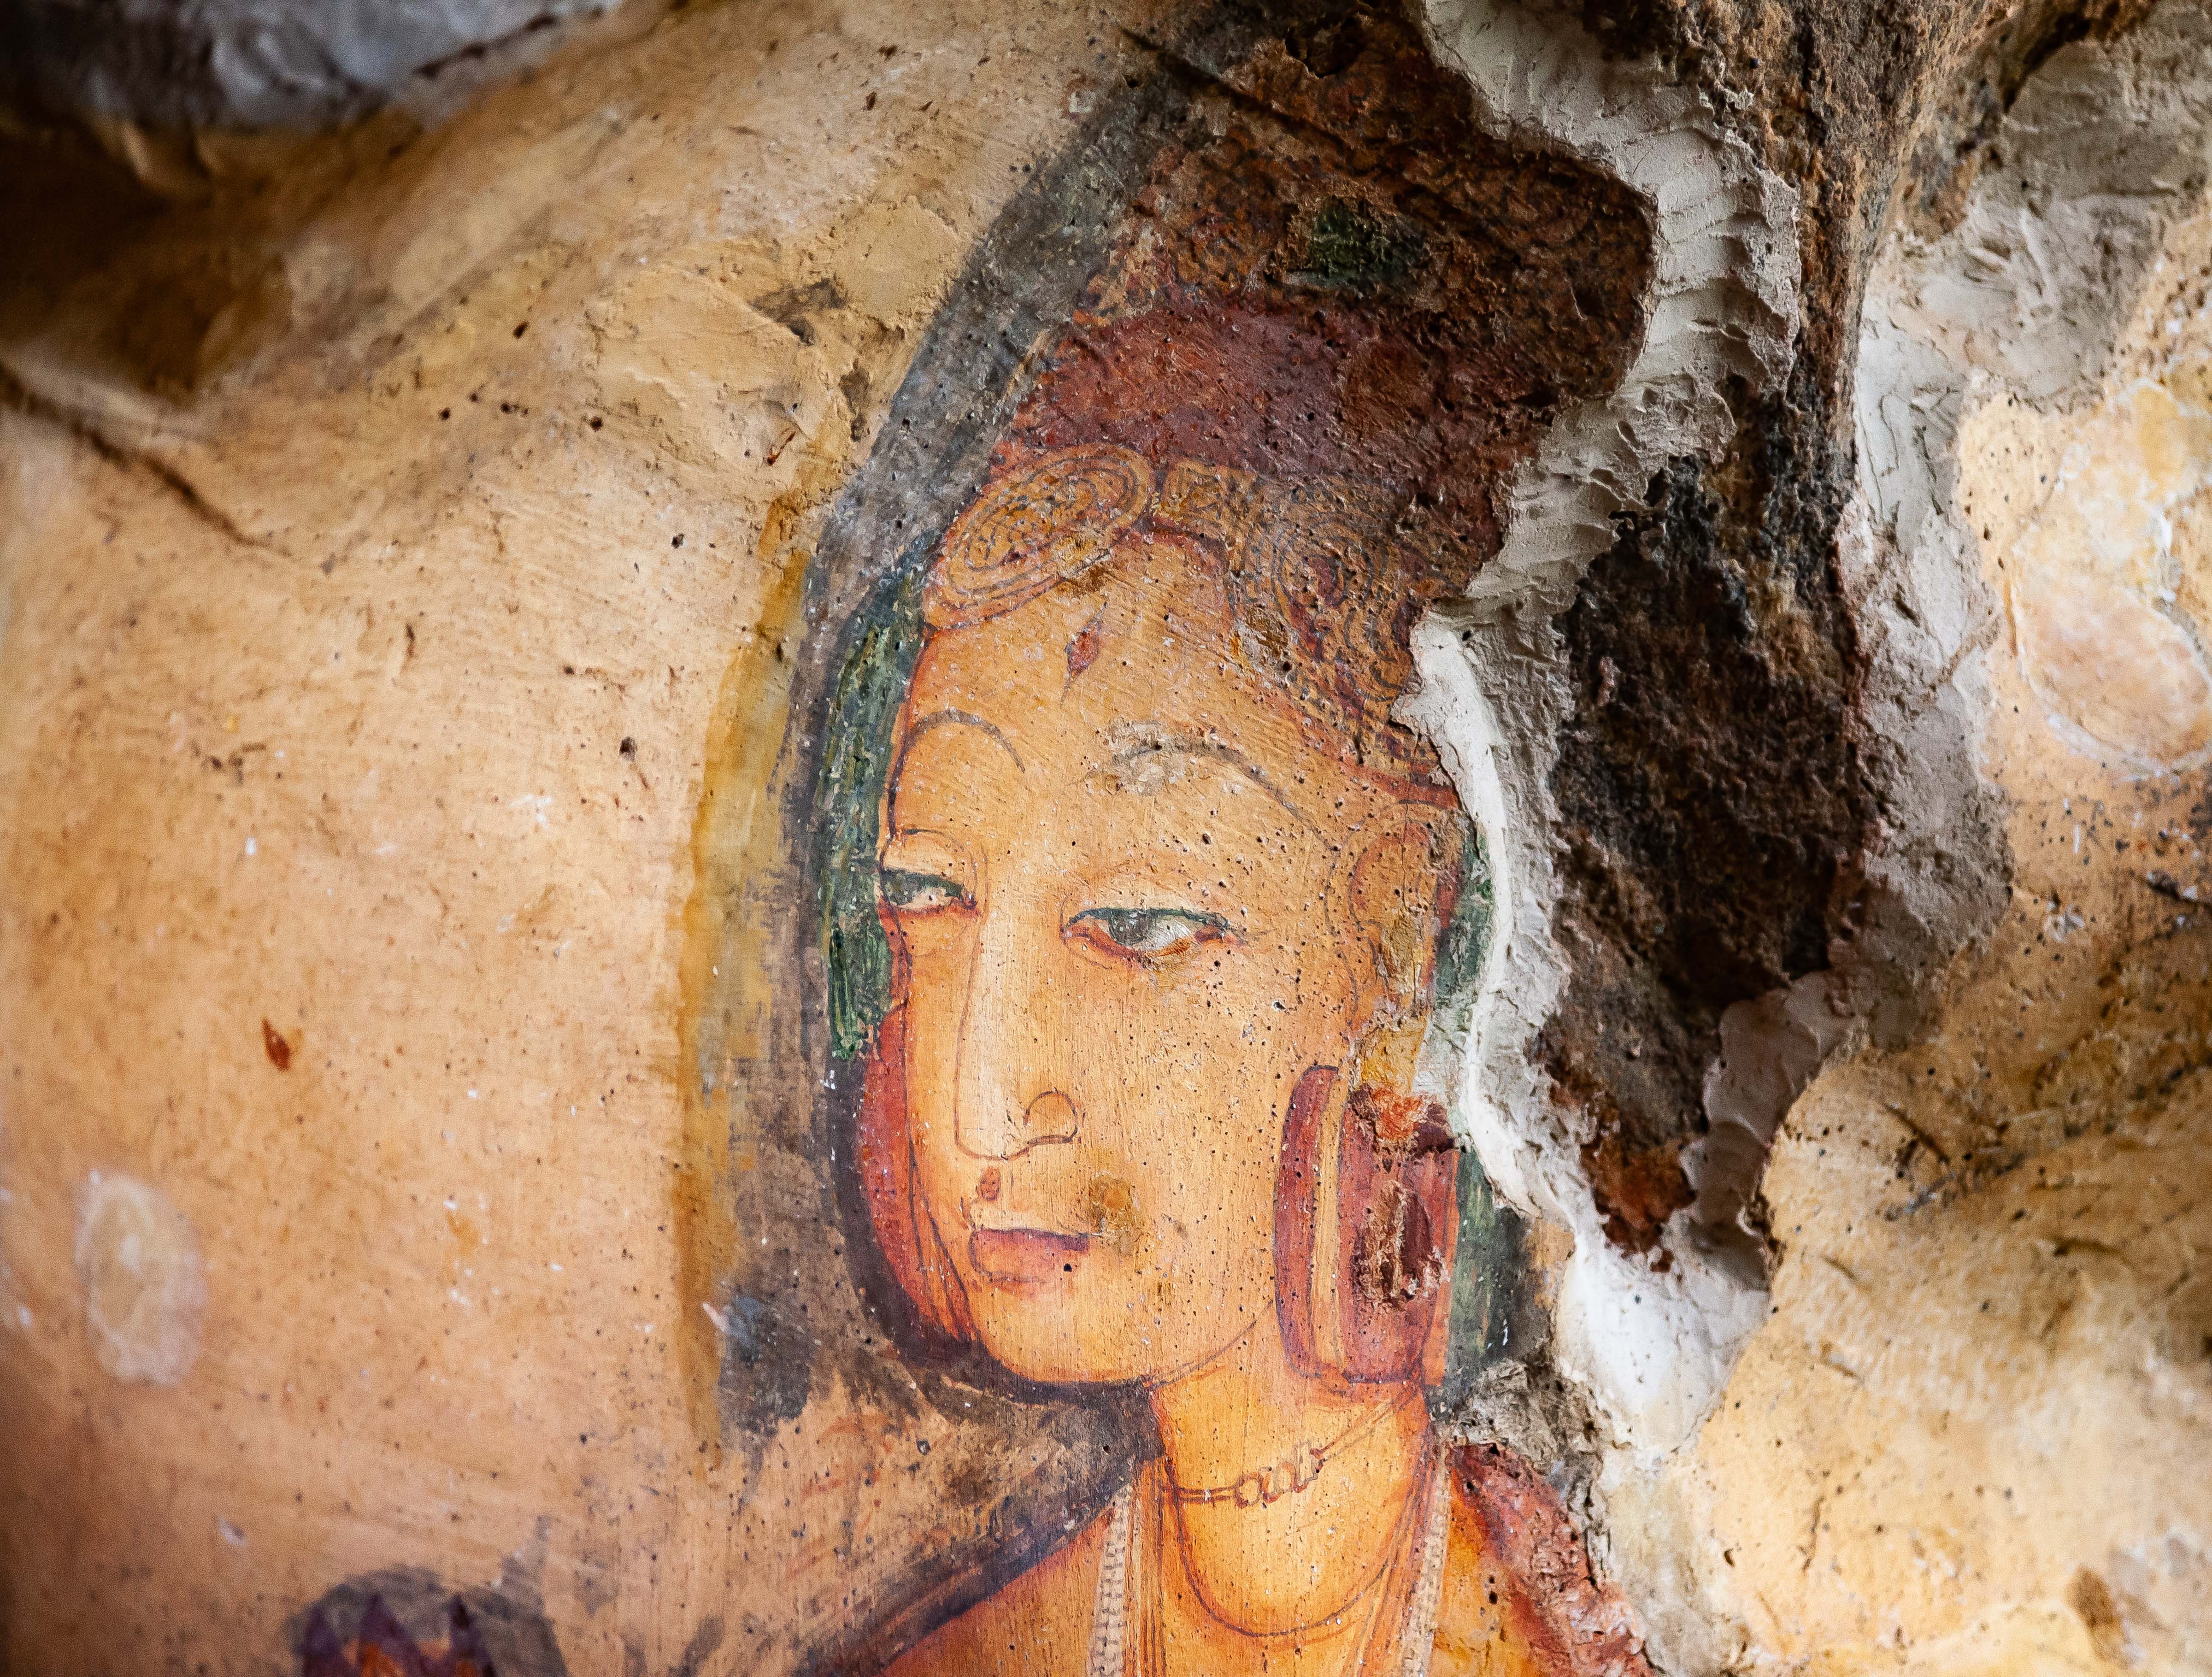 Sri Lanka, Matale Prov, Ancient Wall Painting, 2010, IMG 0249